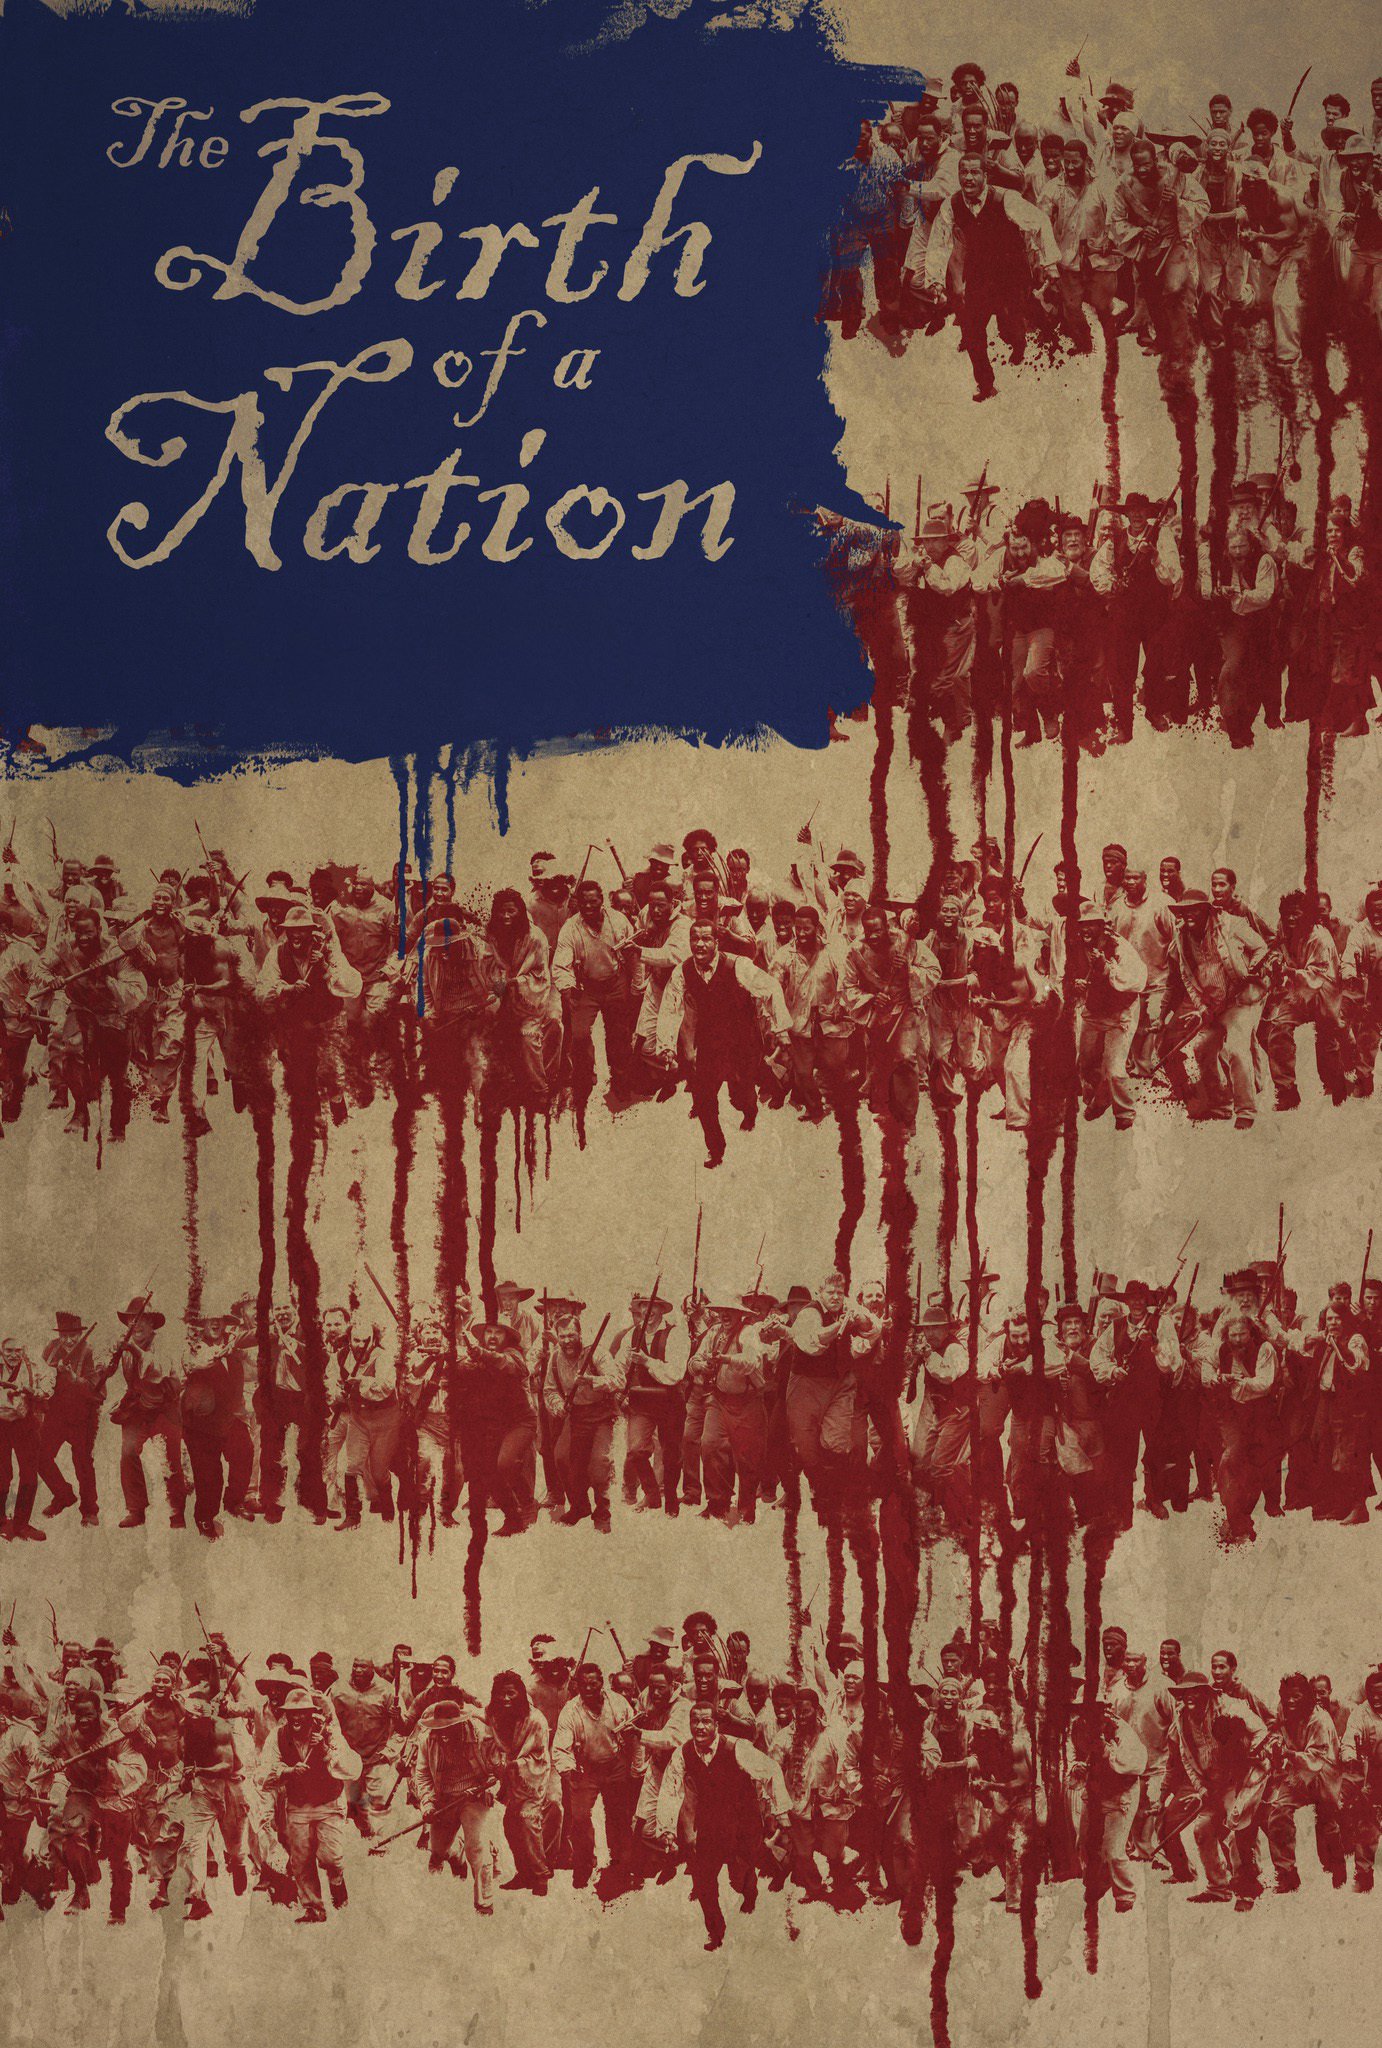 Poster de la película "The Birth of a Nation"